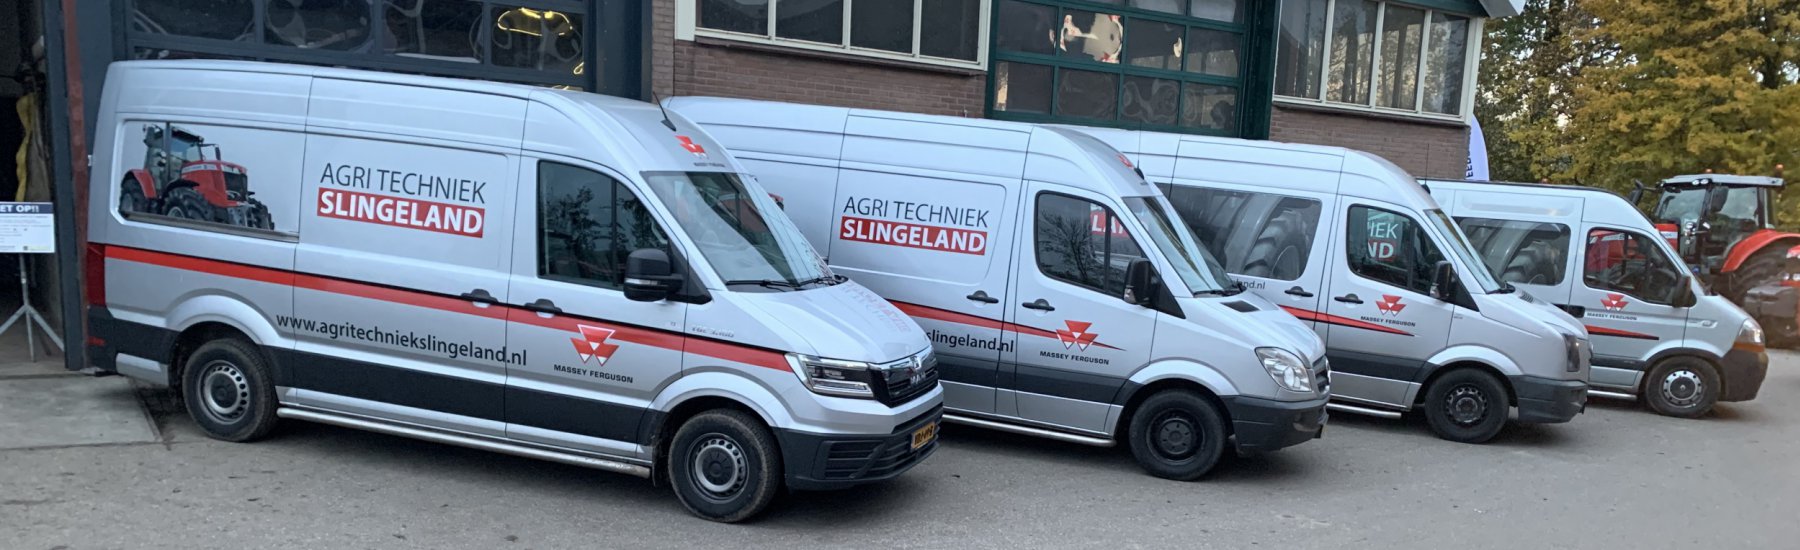 Strautmann voermengwagen afgeleverd aan Kaas- en Zuivelboerderij Kuiper te Giessenburg